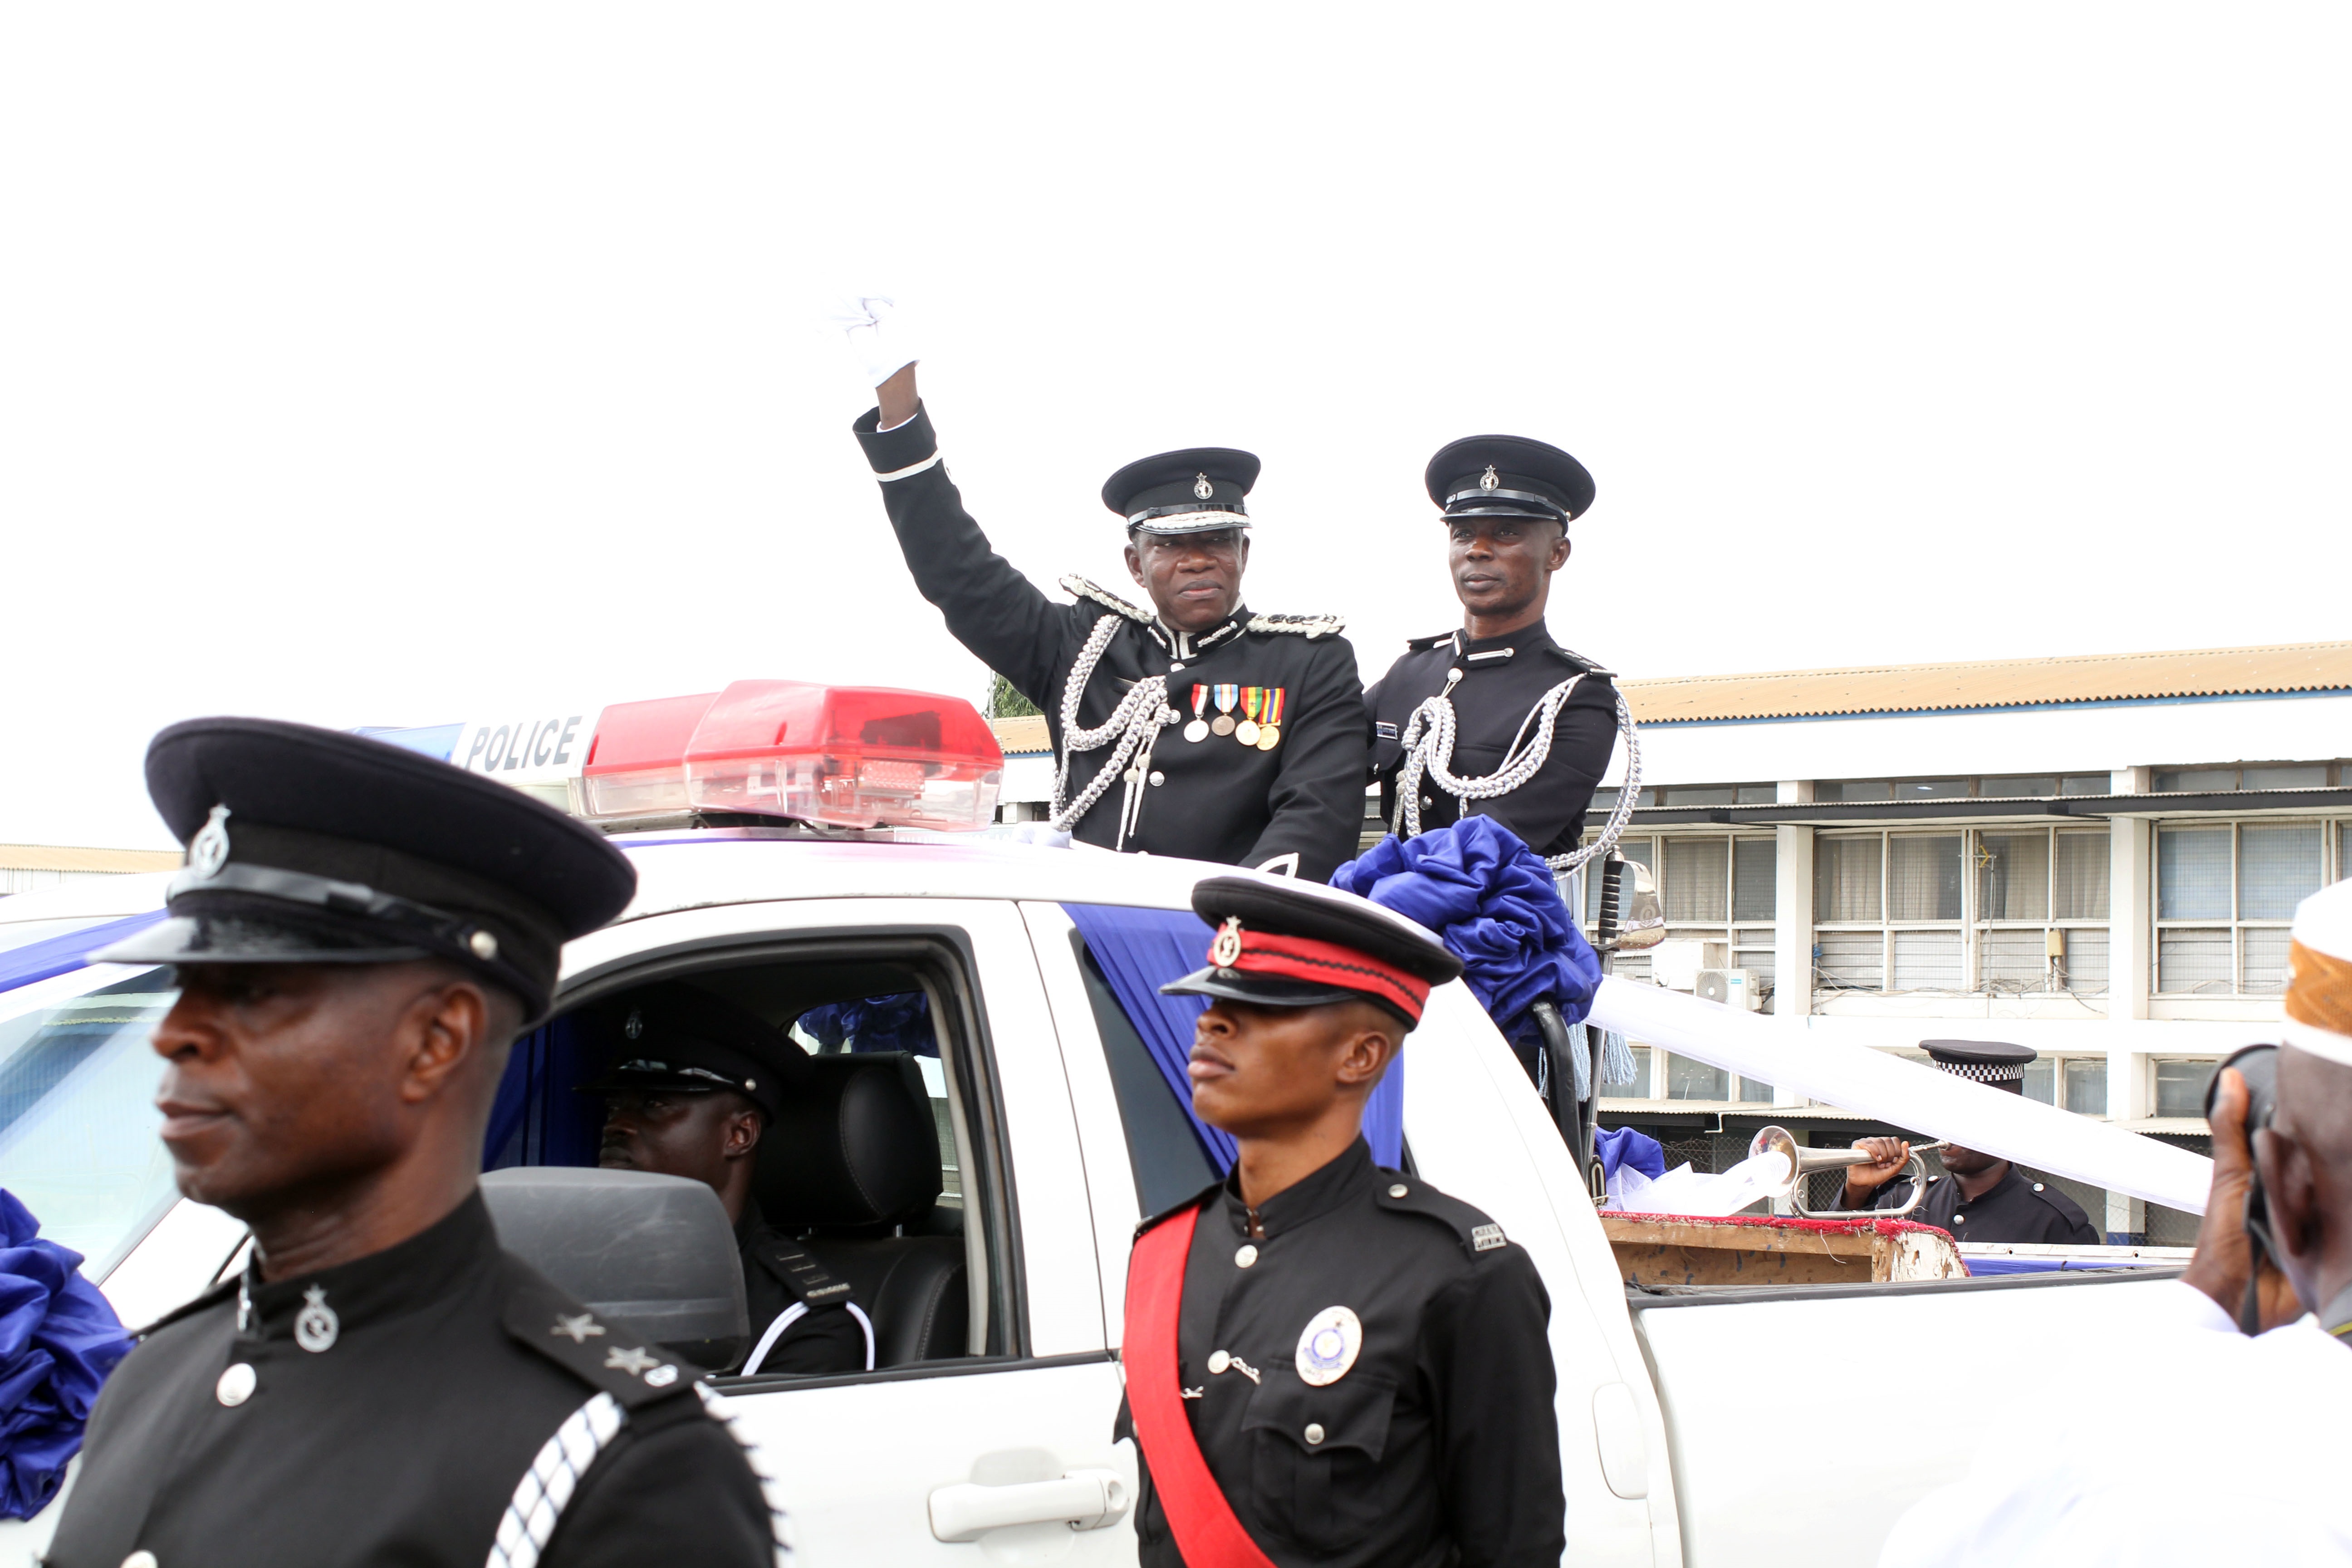 Police CID boss Ken Yeboah retires from active service